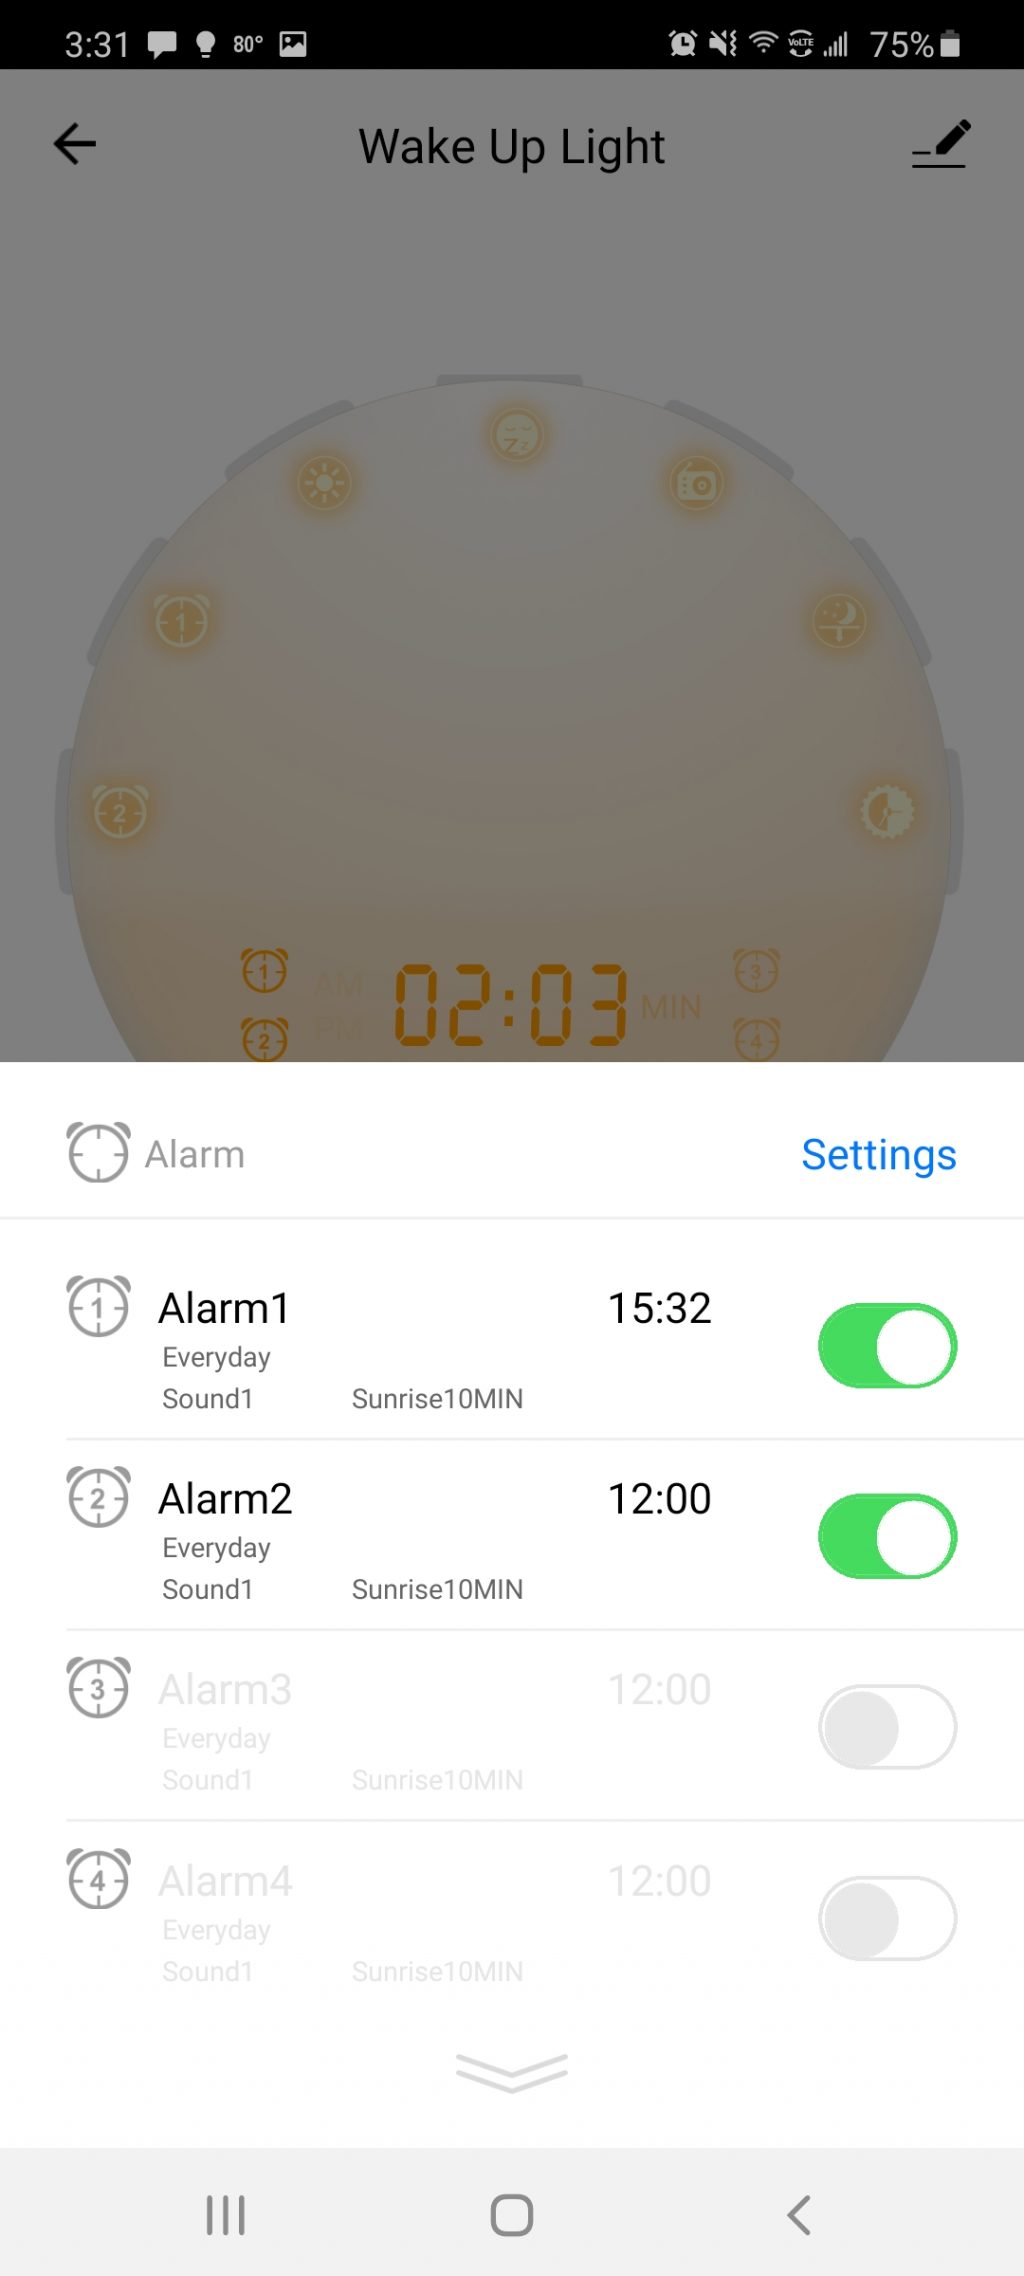 heimvision sunrise alarm clock radio instructions